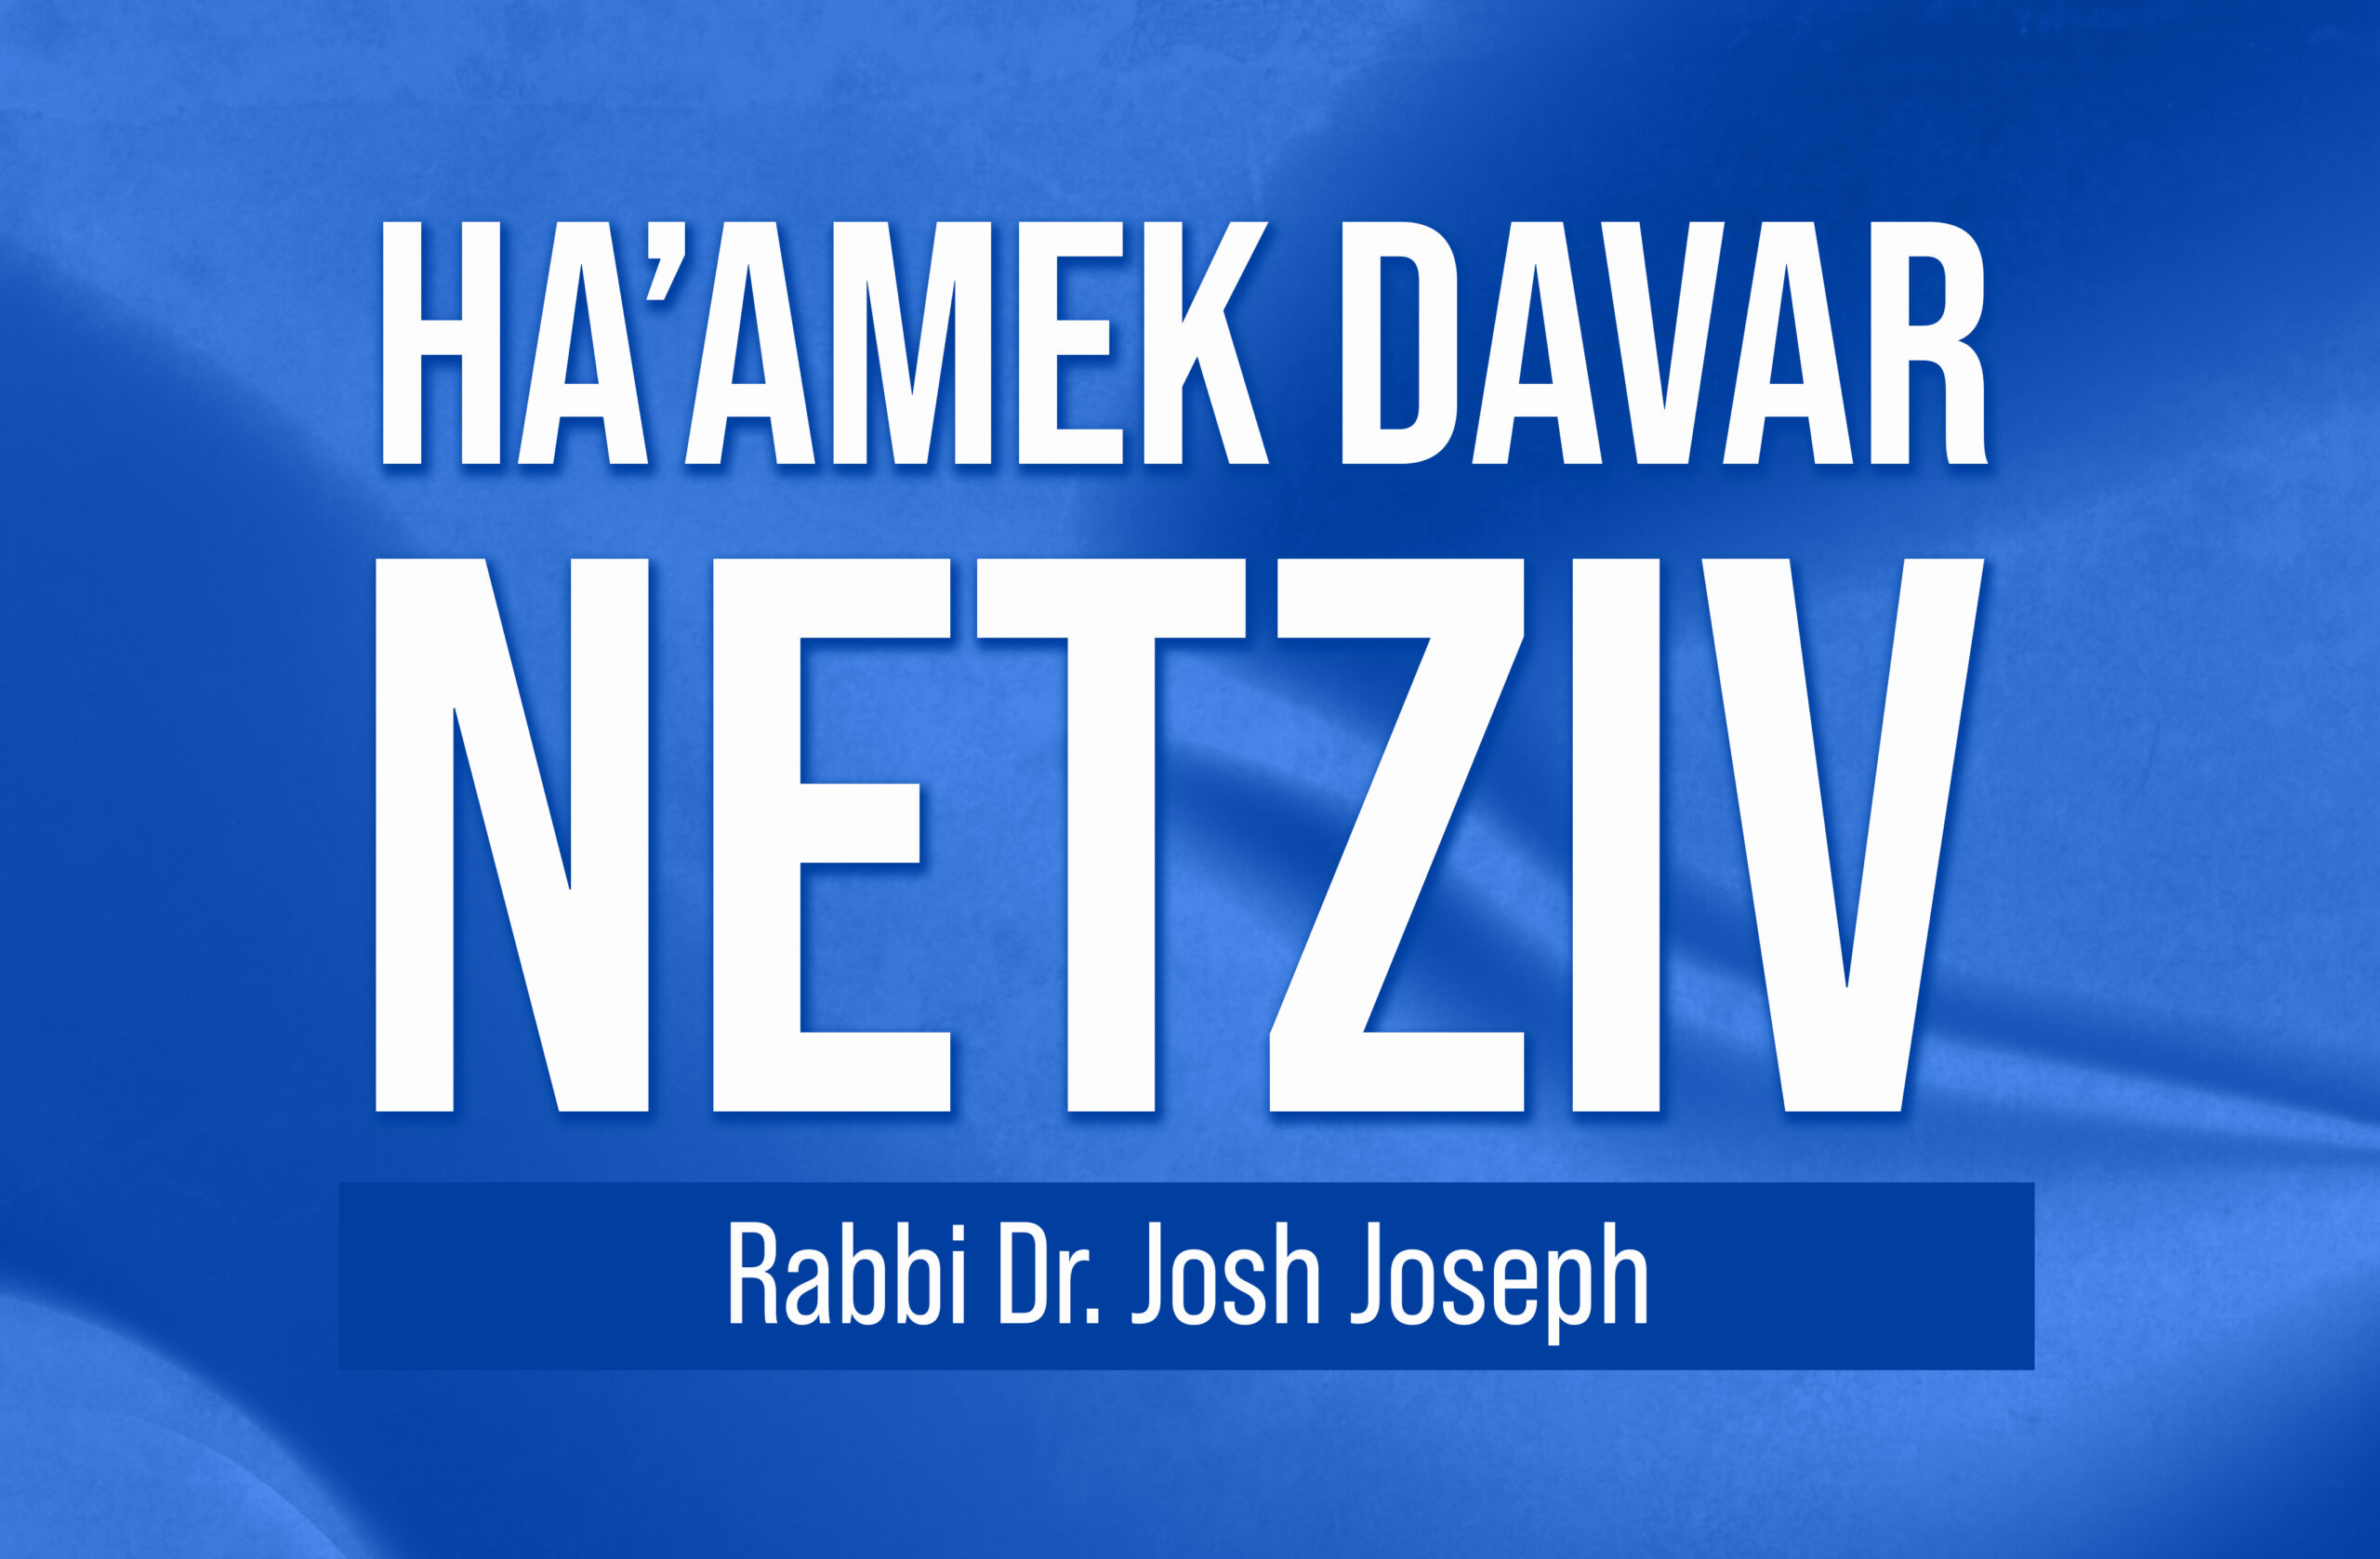 NEW! Ha'amek Davar - Netziv by Rabbi Dr. Josh Joseph